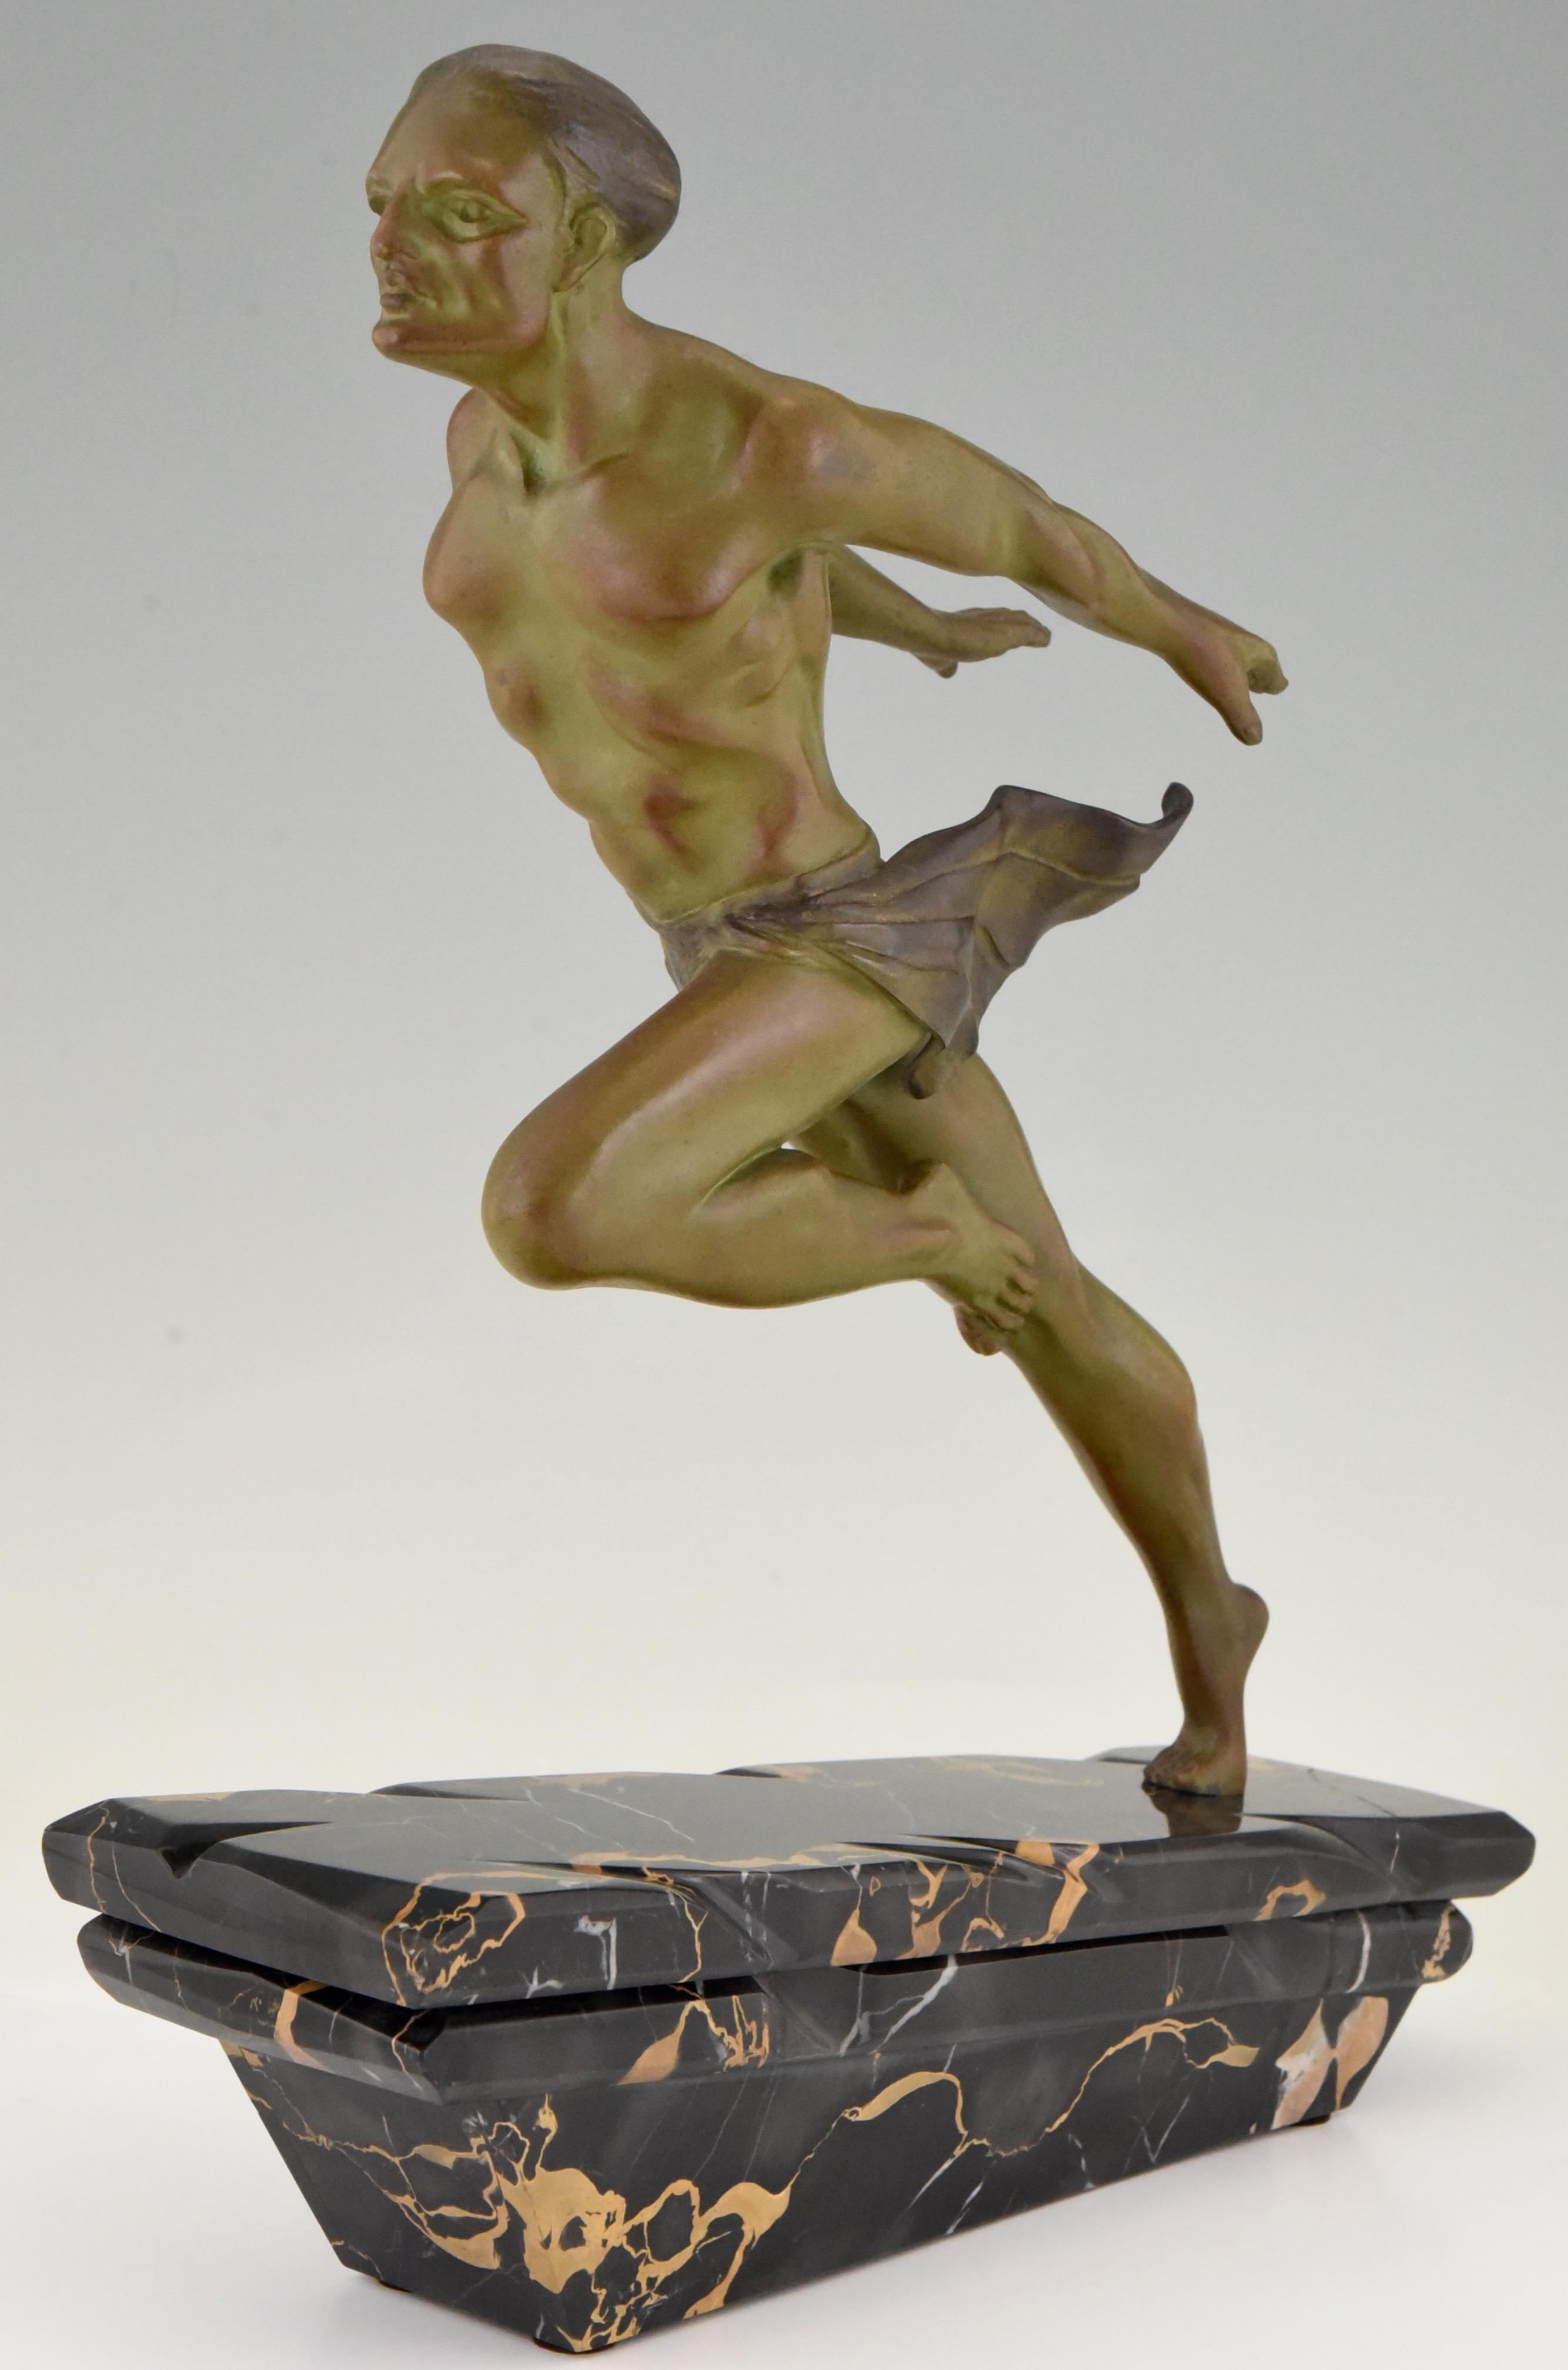 Patinated Art Deco Sculpture Running Man or Athlète L. Valderi, France, 1930